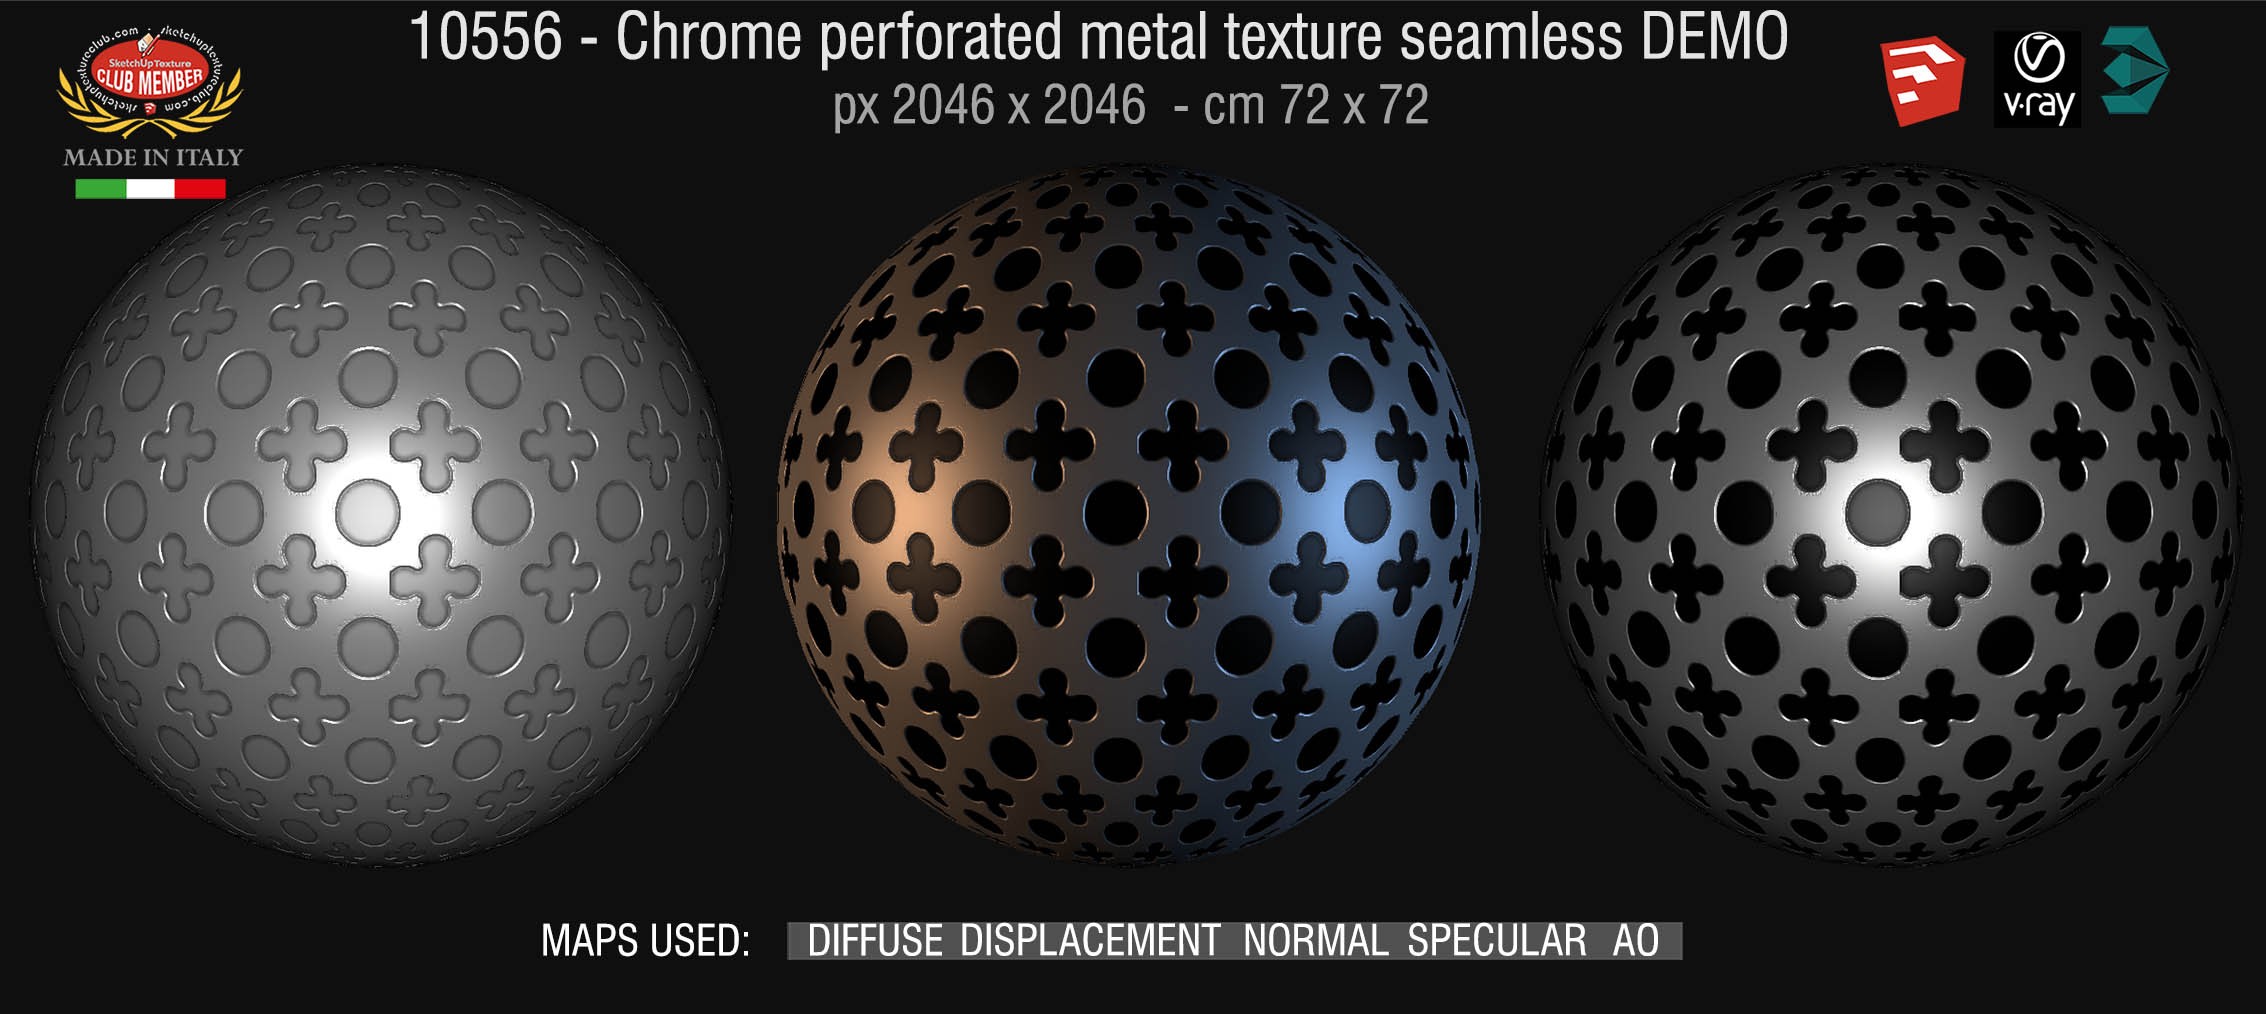 10556 HR Chrome perforated metal texture seamless + maps DEMO